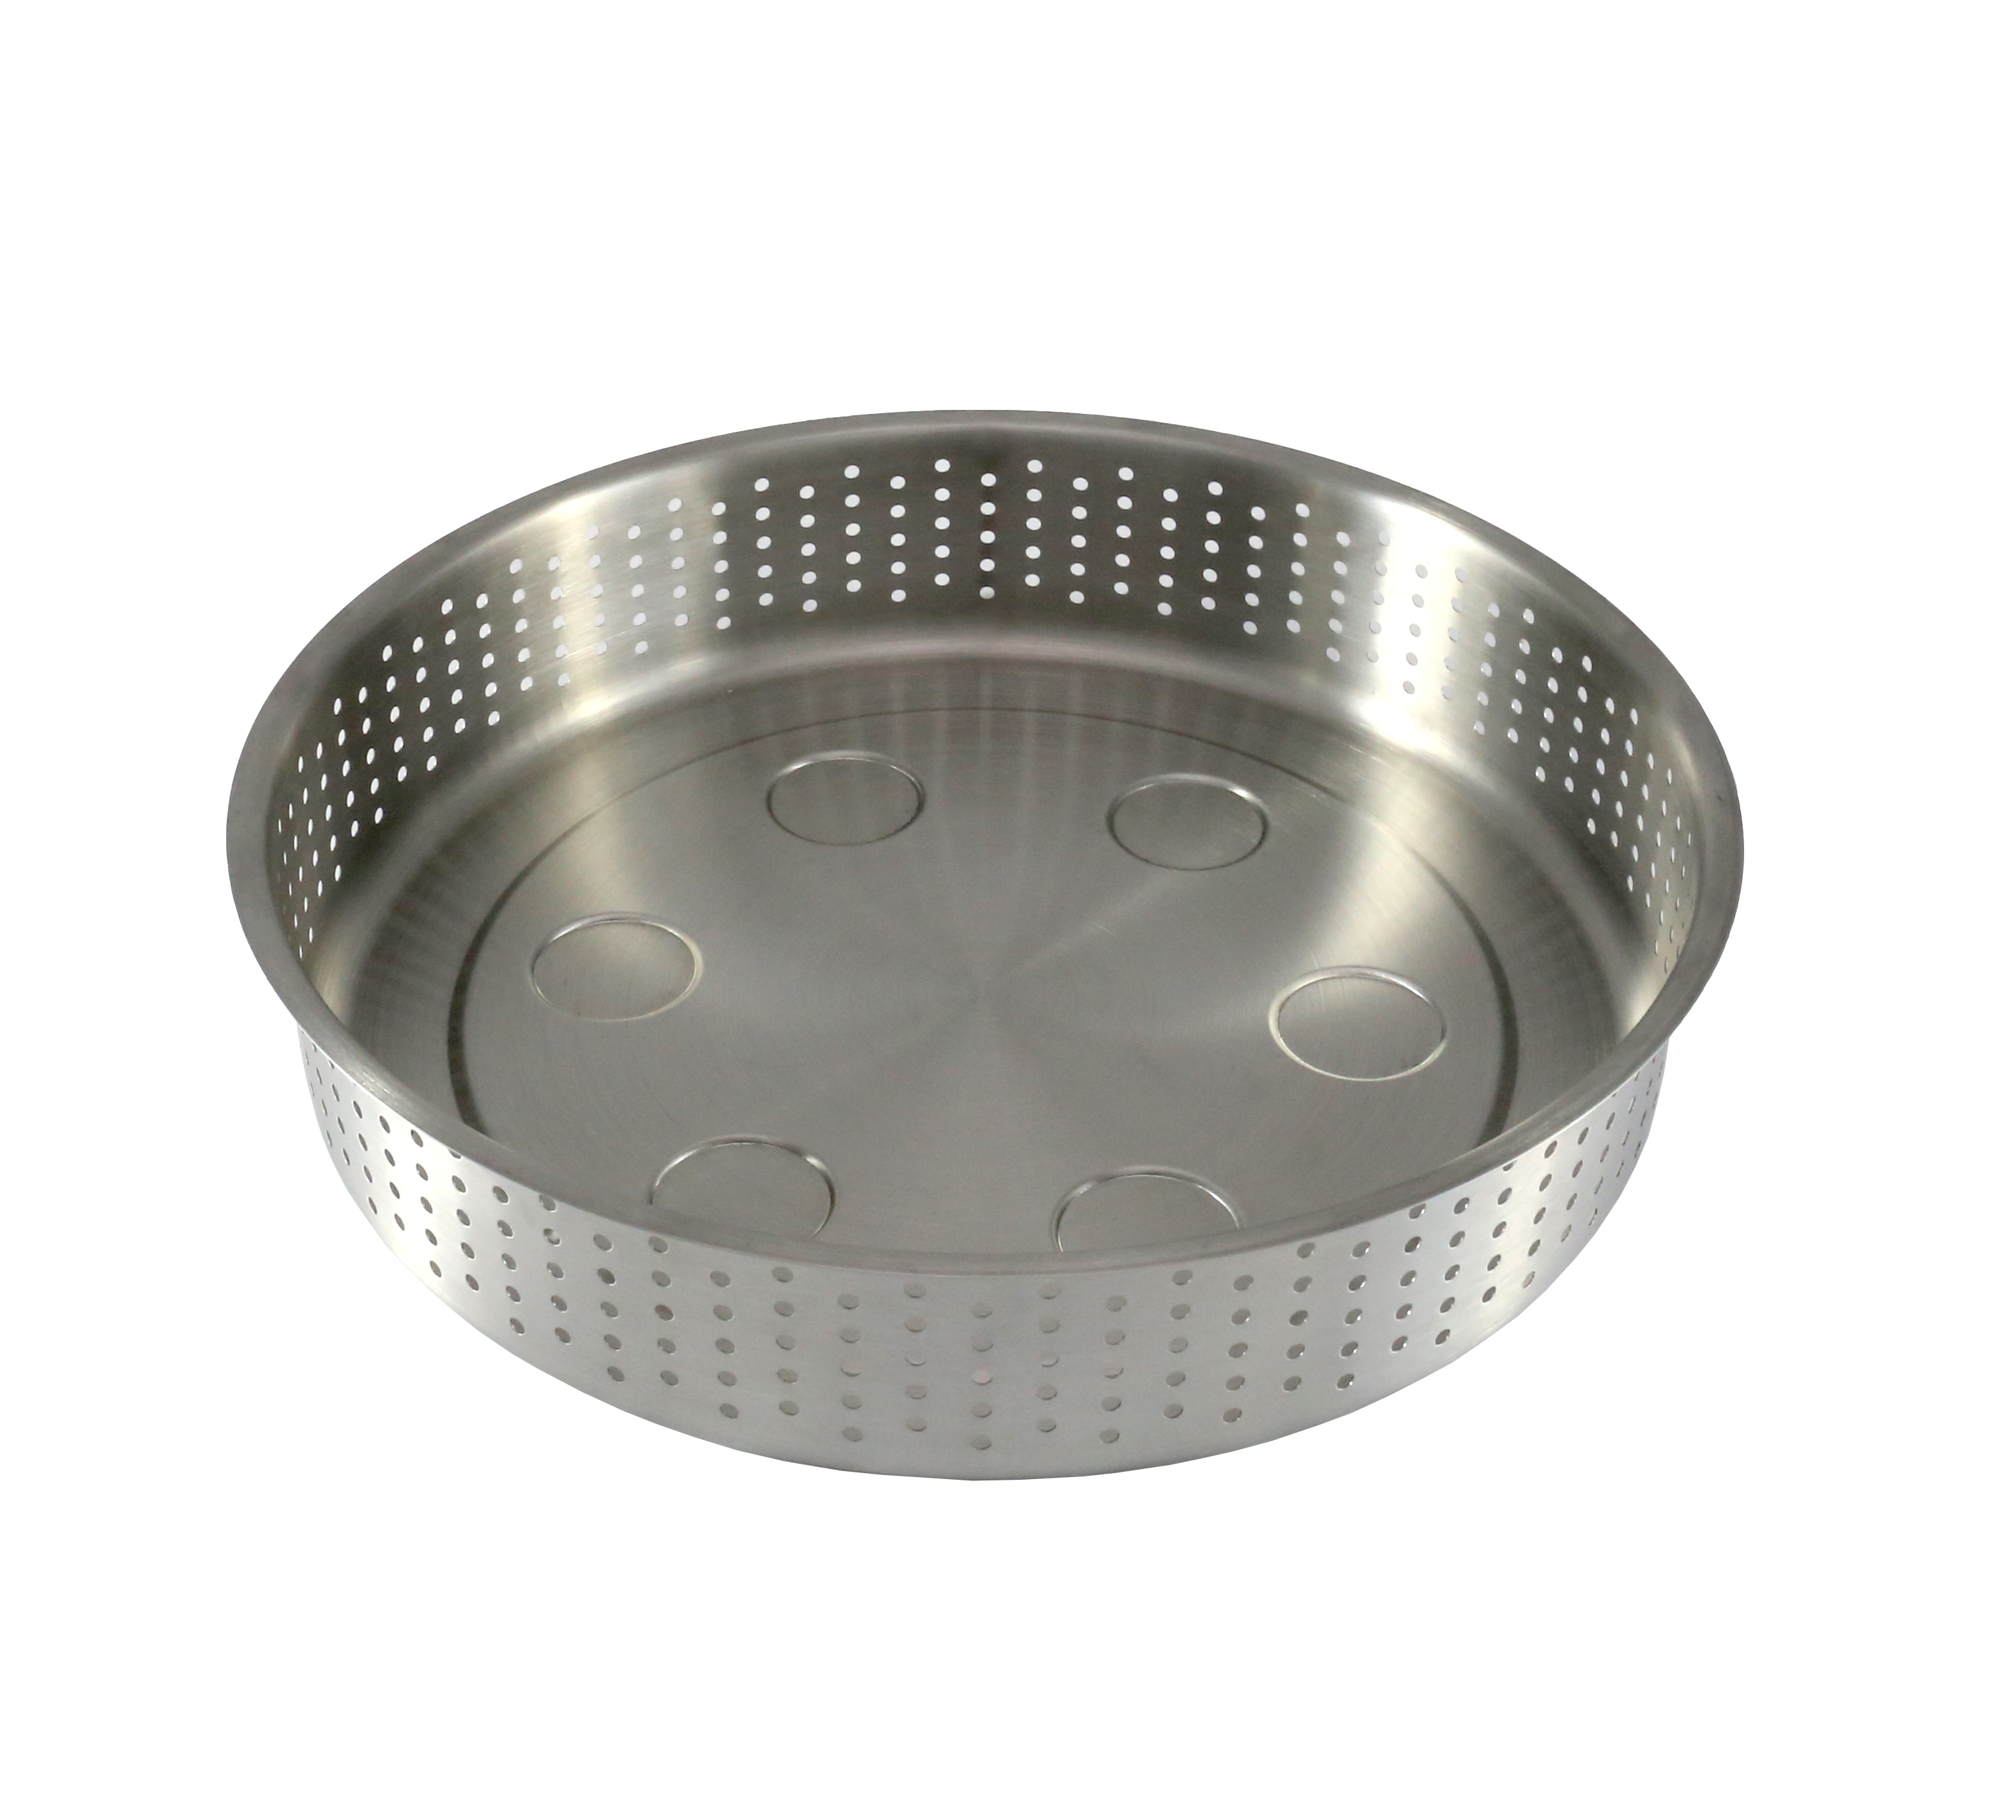 Griddle pan warming plate     